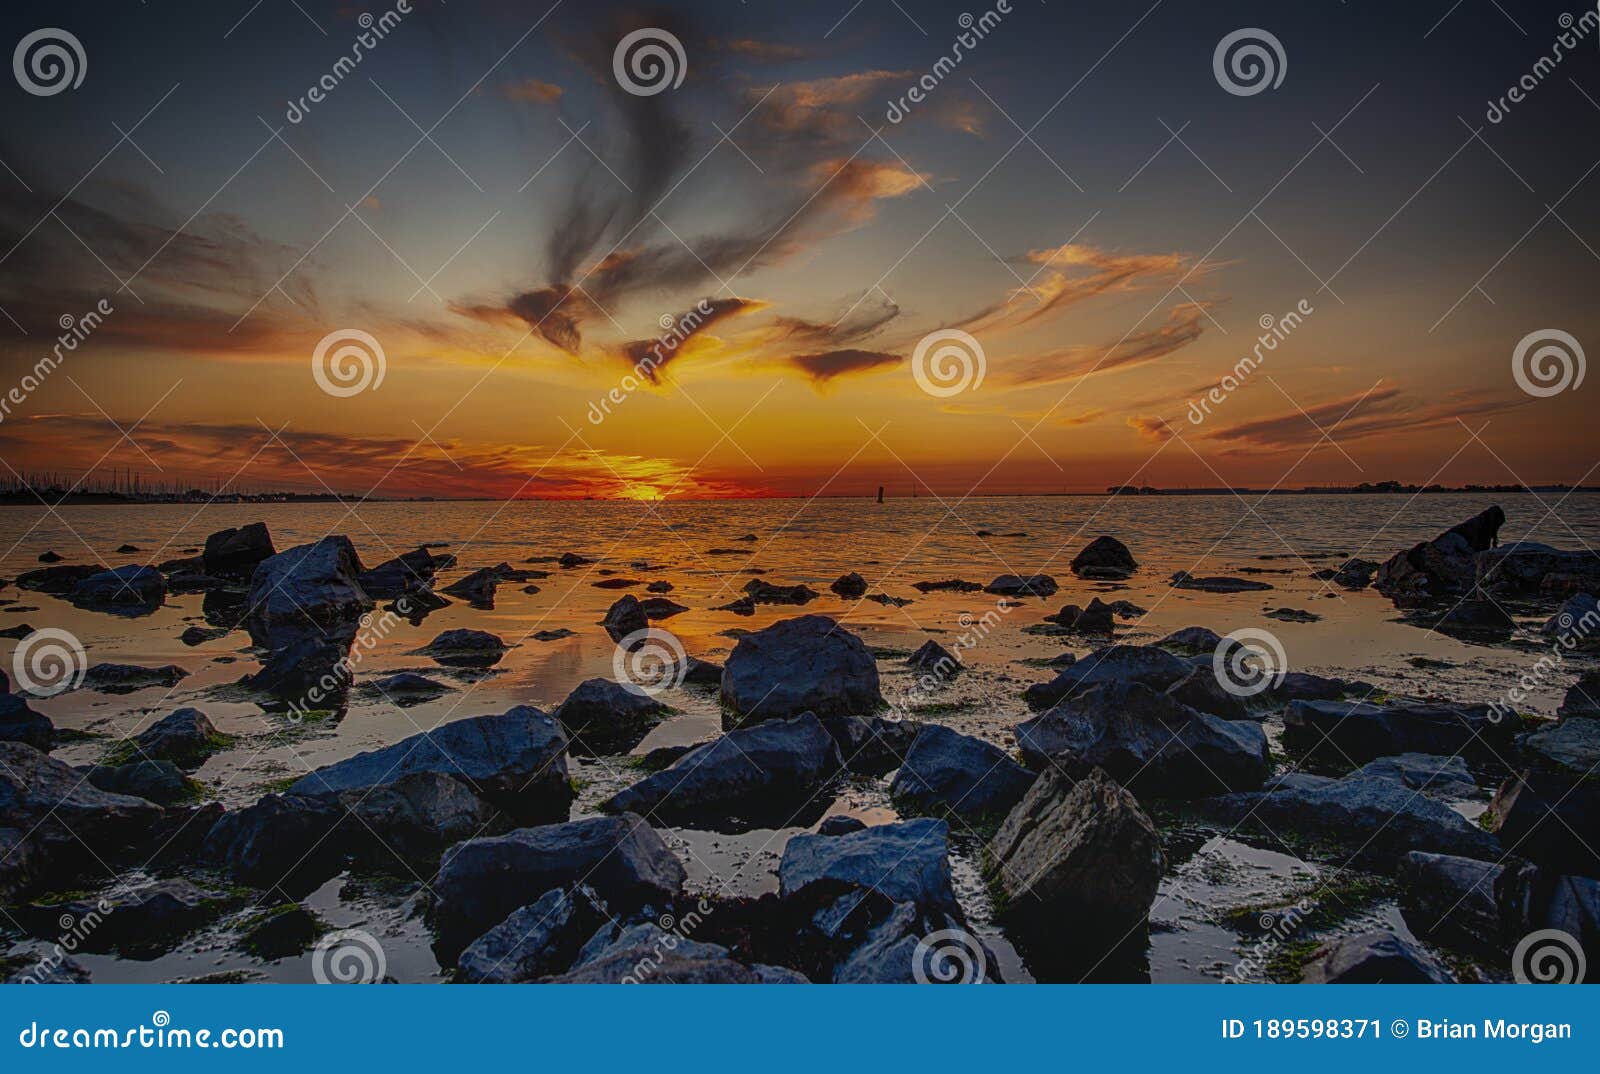 sunset at zeeland in holland